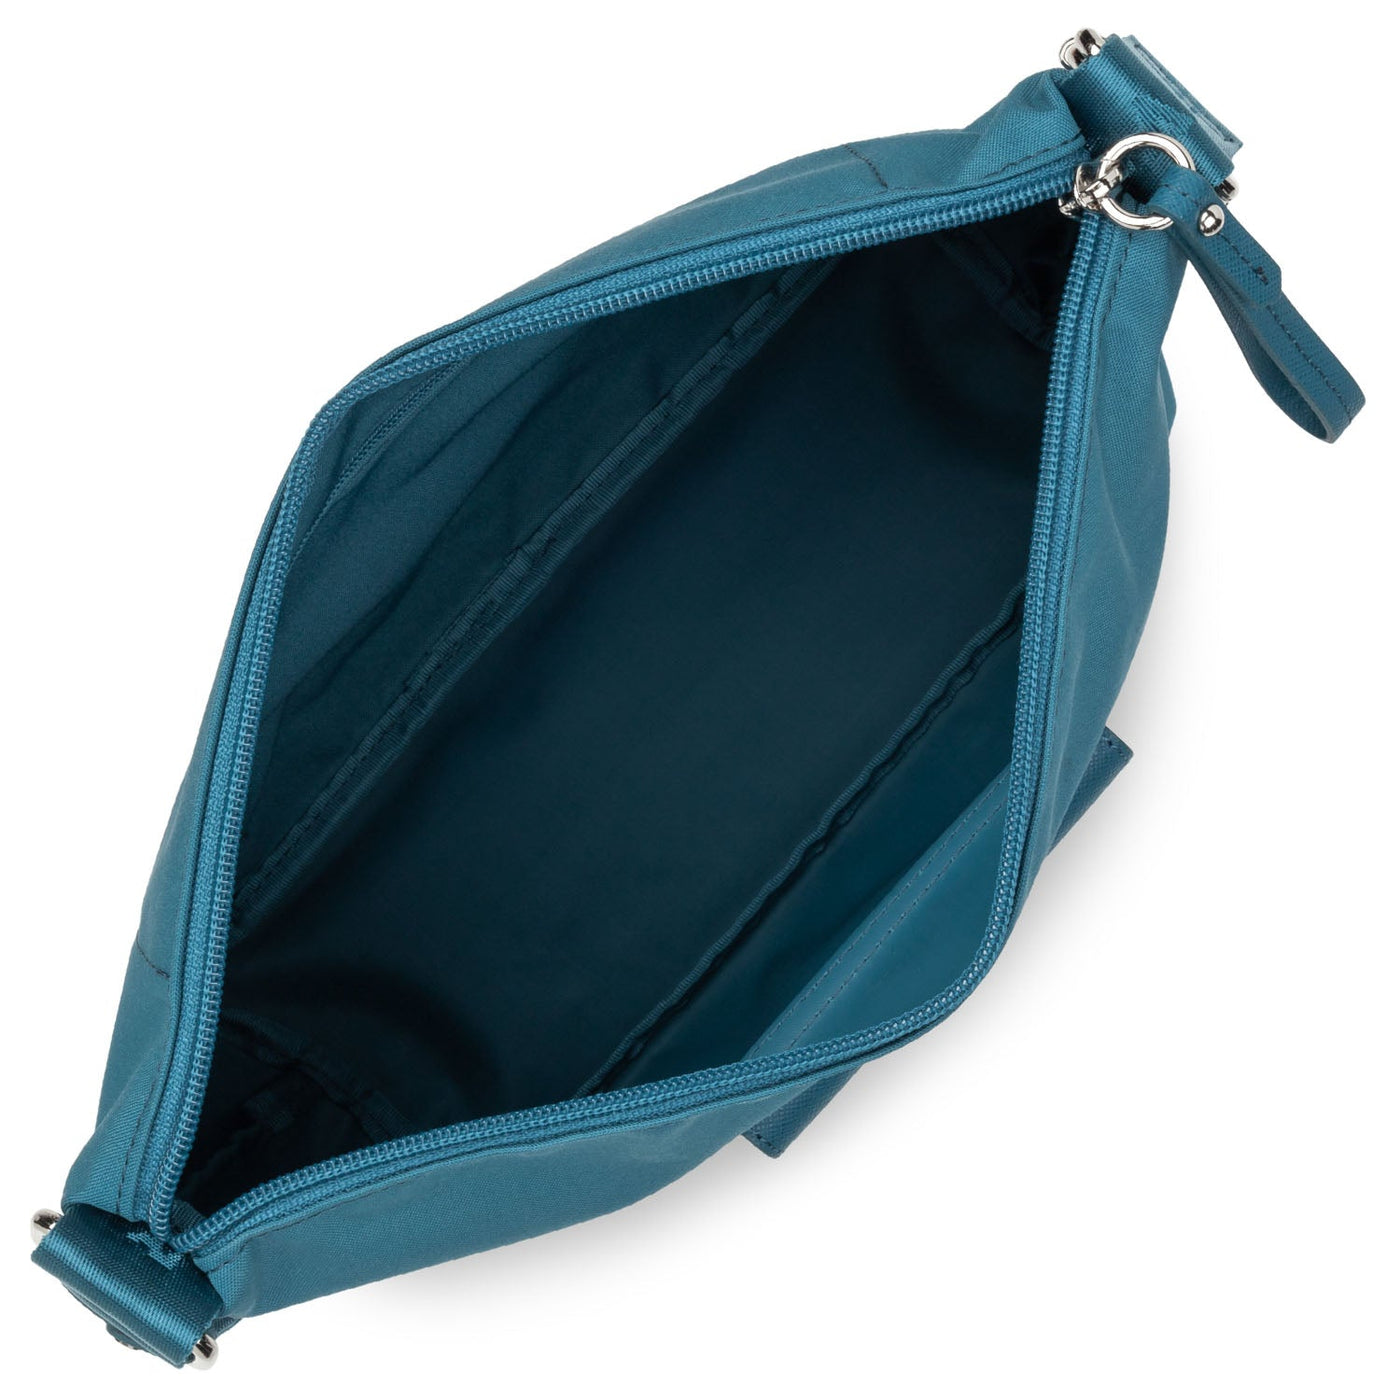 shoulder bag - smart kba #couleur_bleu-paon